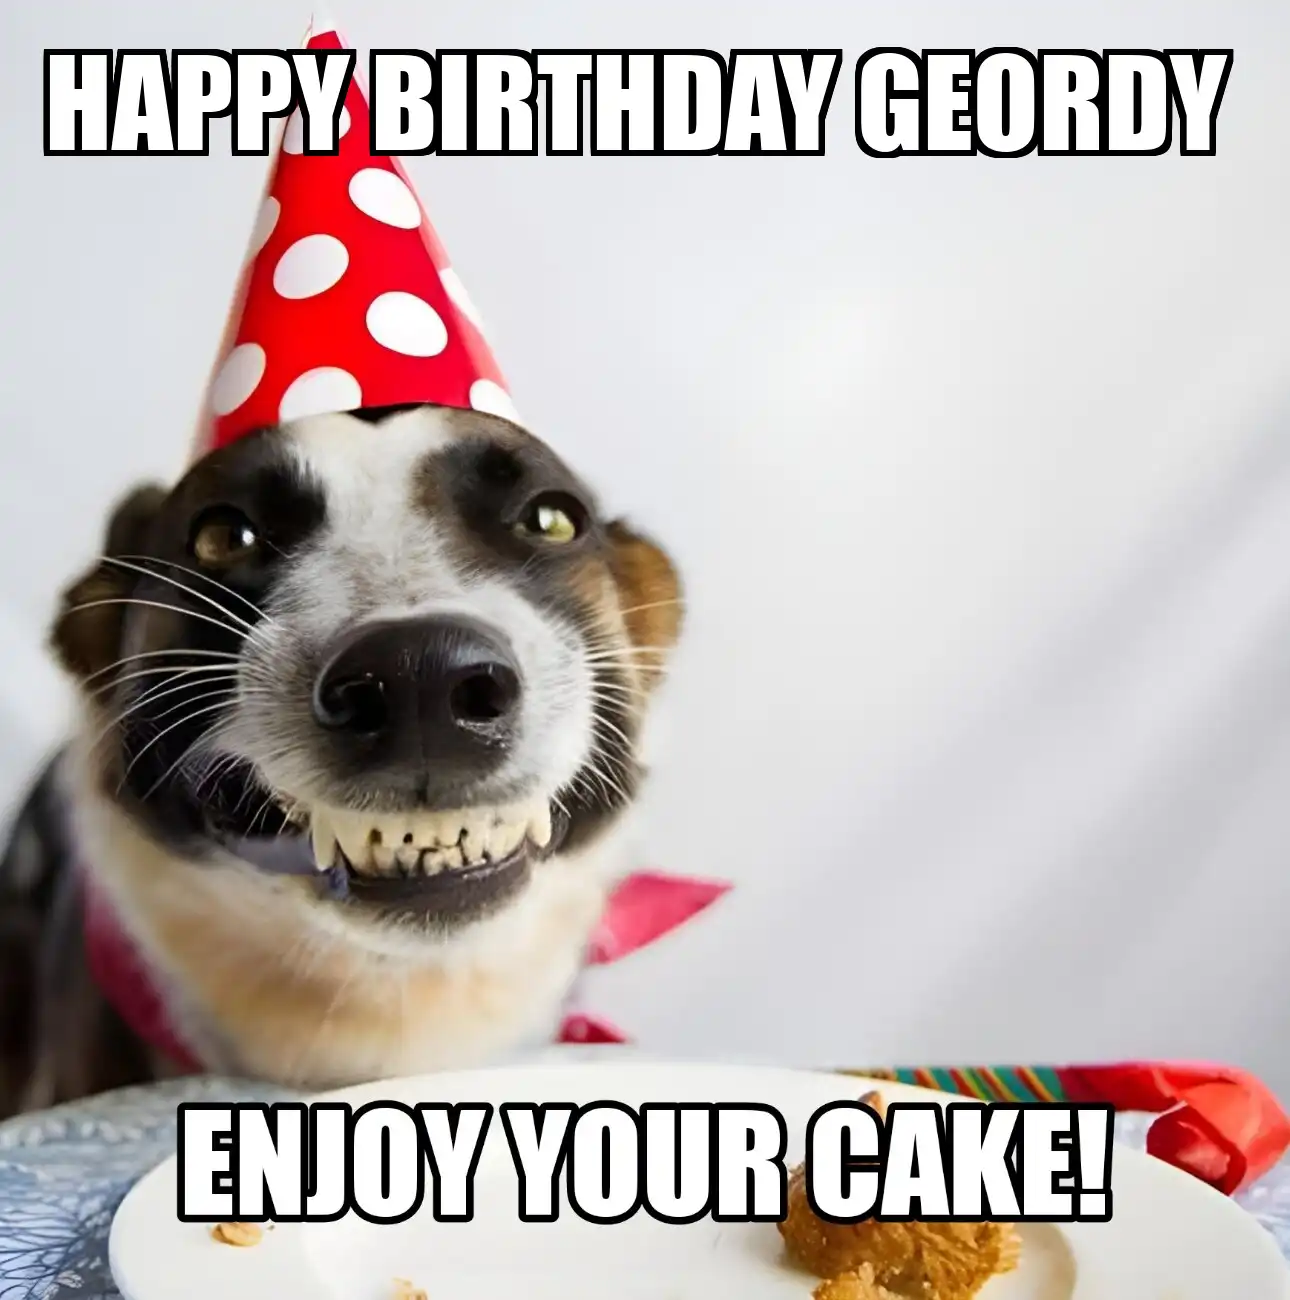 Happy Birthday Geordy Enjoy Your Cake Dog Meme